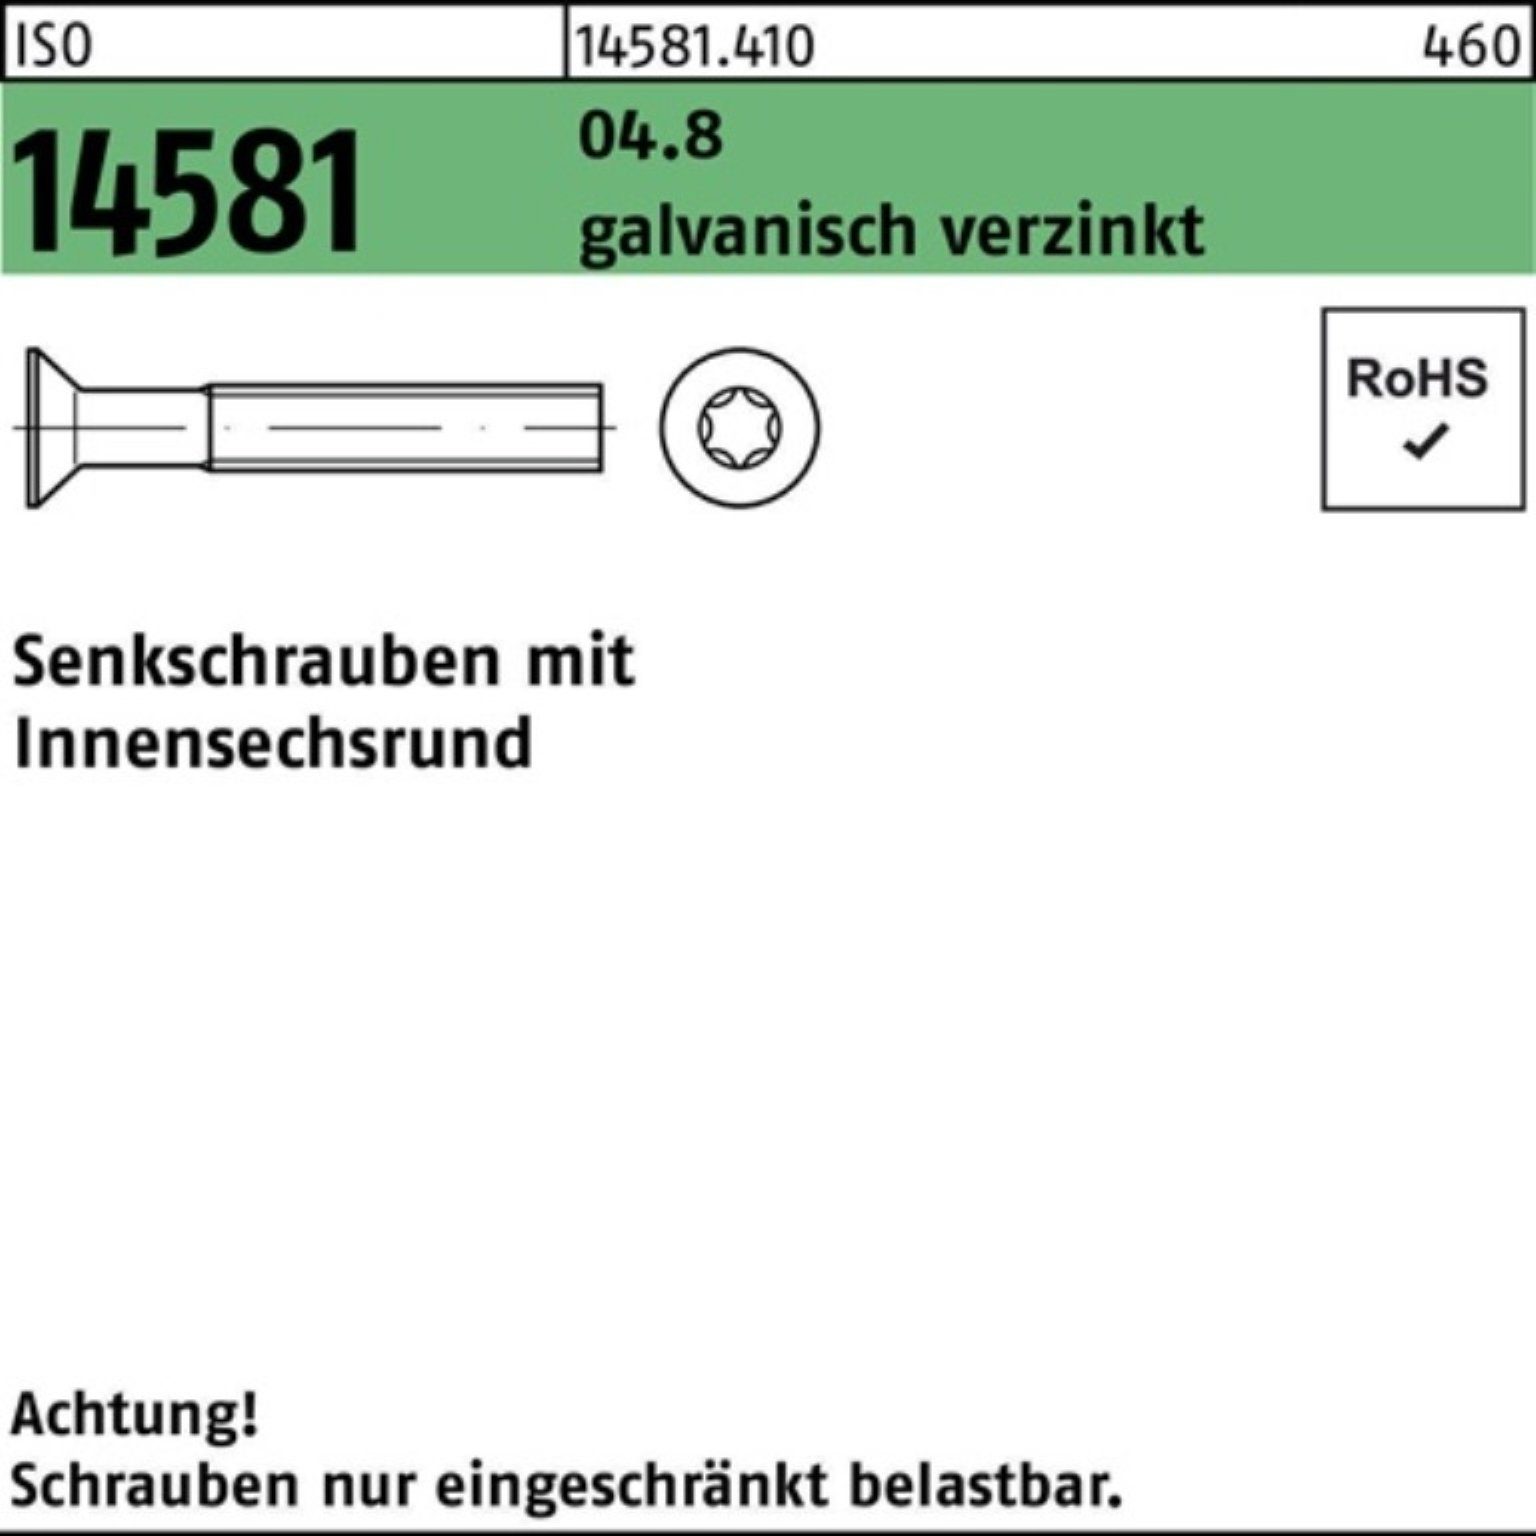 ISO T25 1000S Senkschraube Pack Reyher ISR 04.8 14581 Senkschraube galv.verz. M5x30 1000er